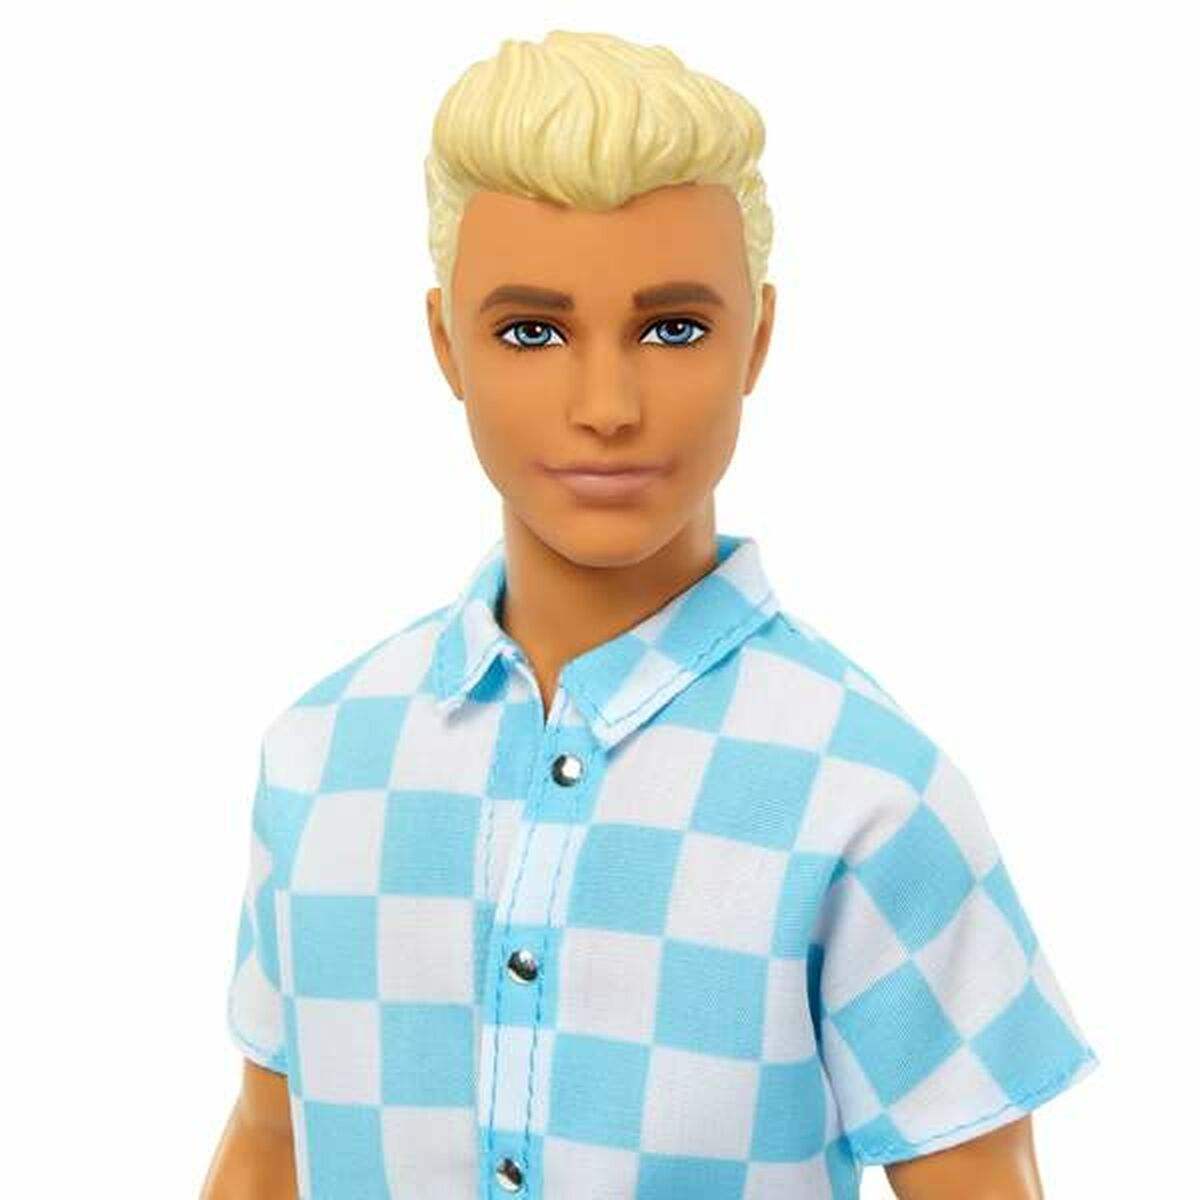 Figurine Barbie Ken Beack Day